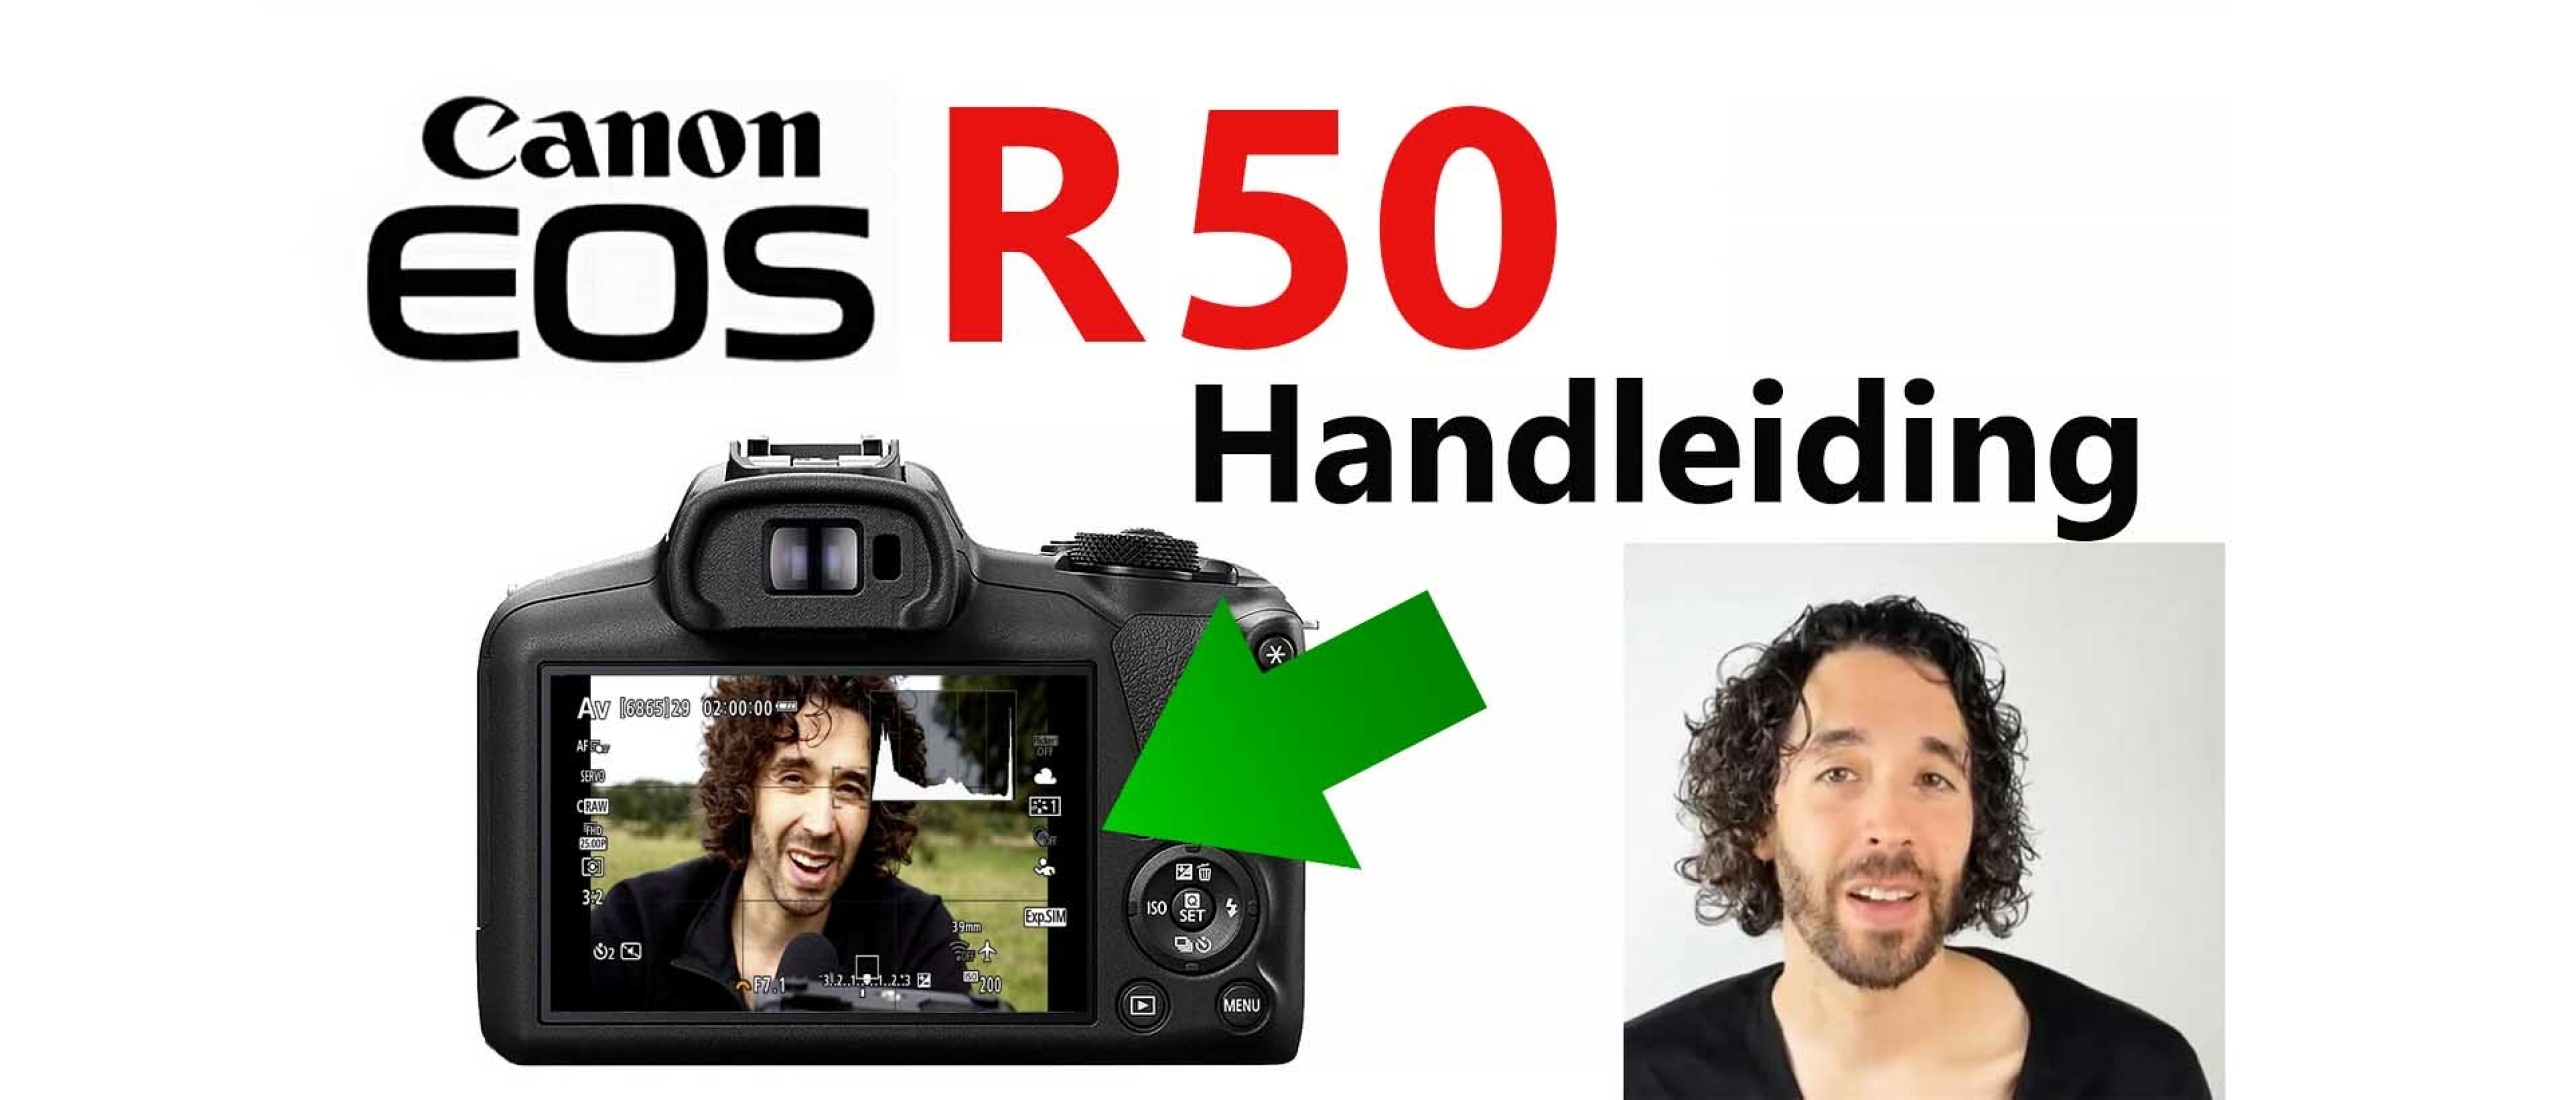 Canon EOS R50 Systeem Camera Handleiding: Functies, knoppen, menu en instellingen uitgelegd